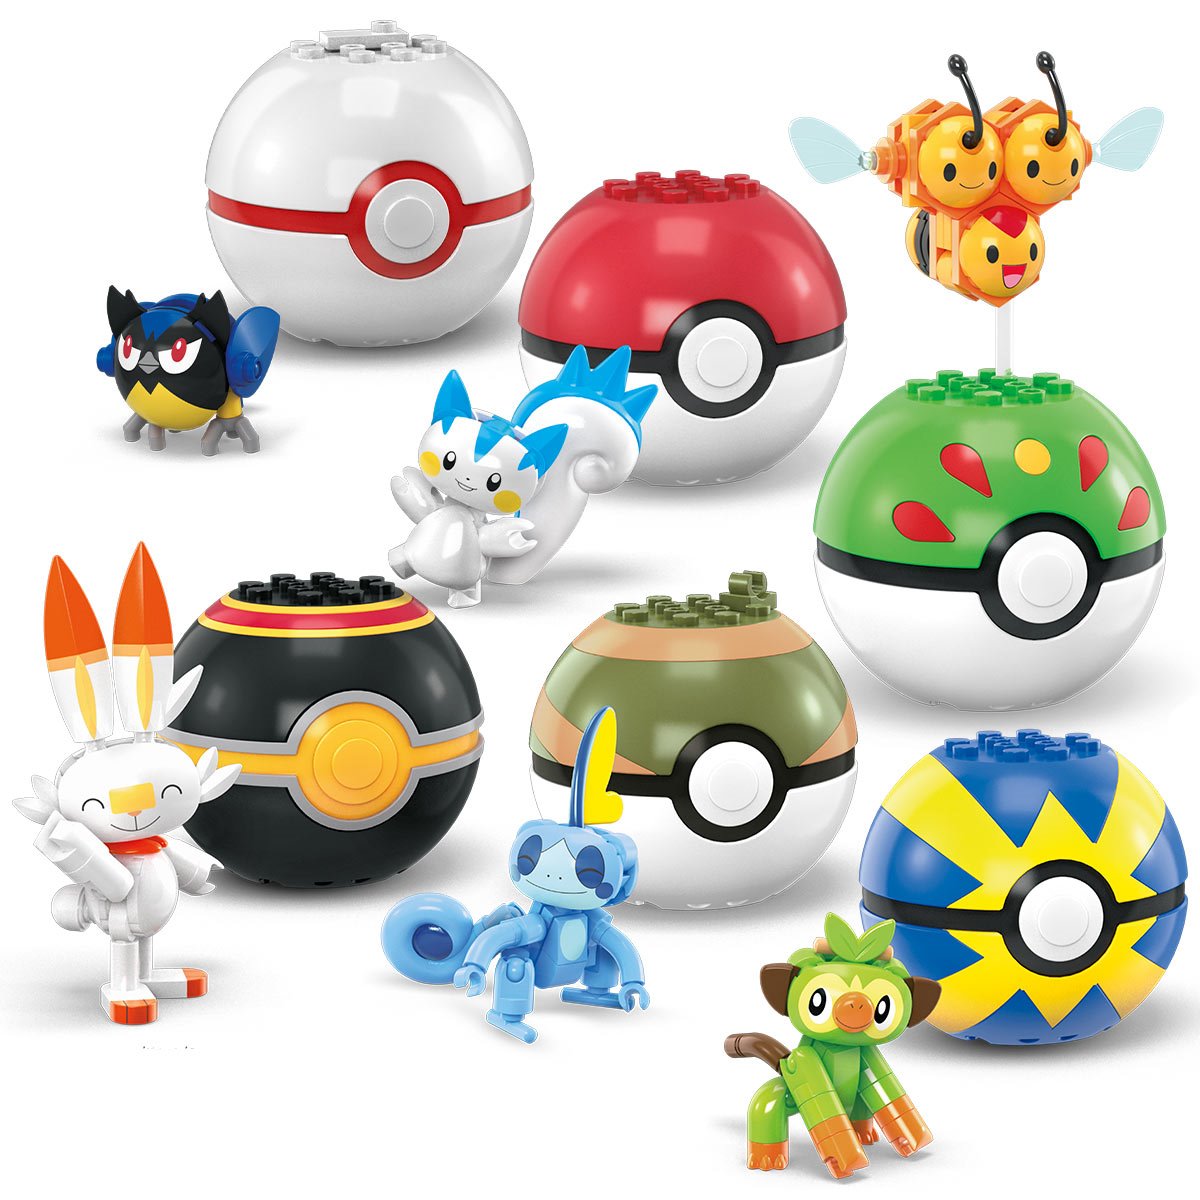 Pokémon - Mega Construx Poke Ball Series 17